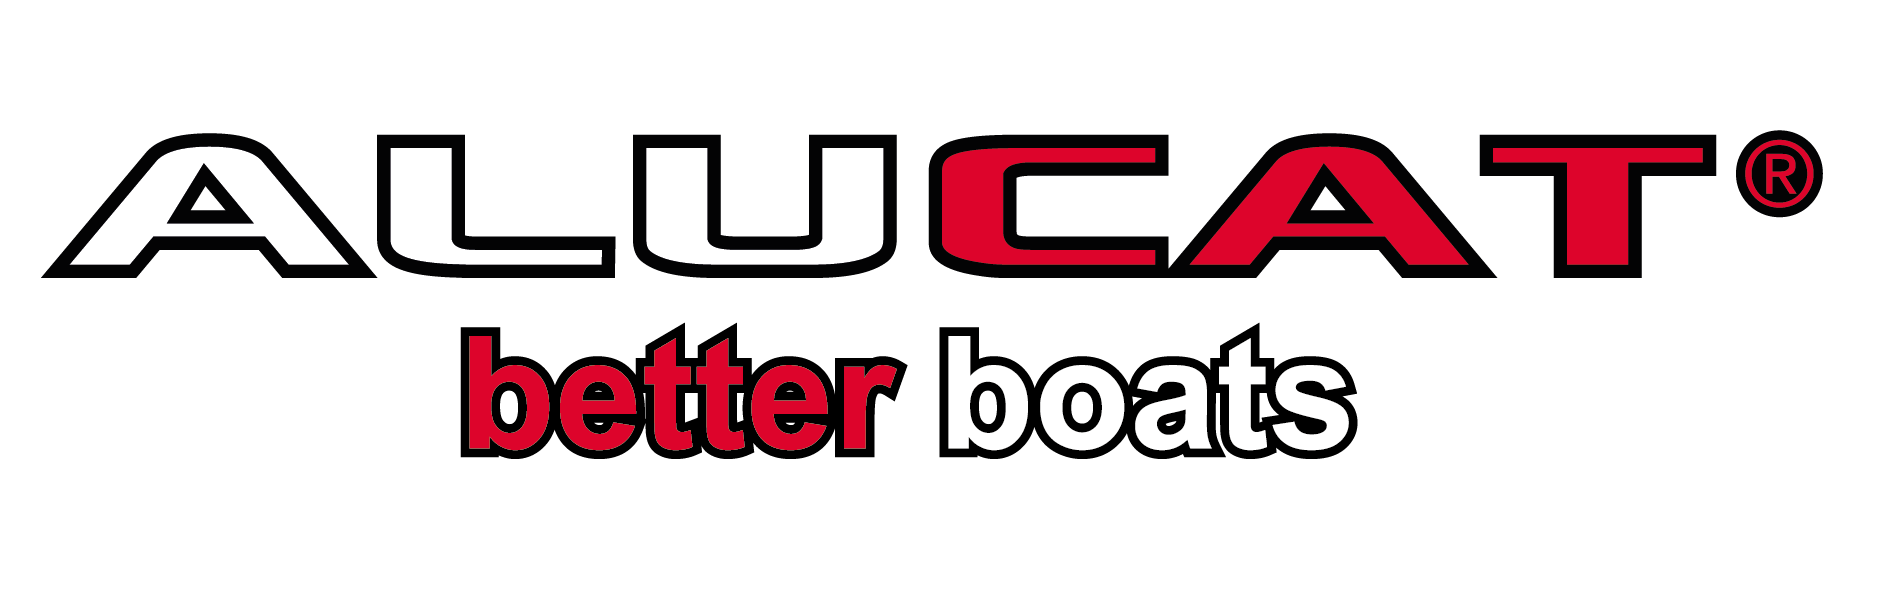 Alucat better boats